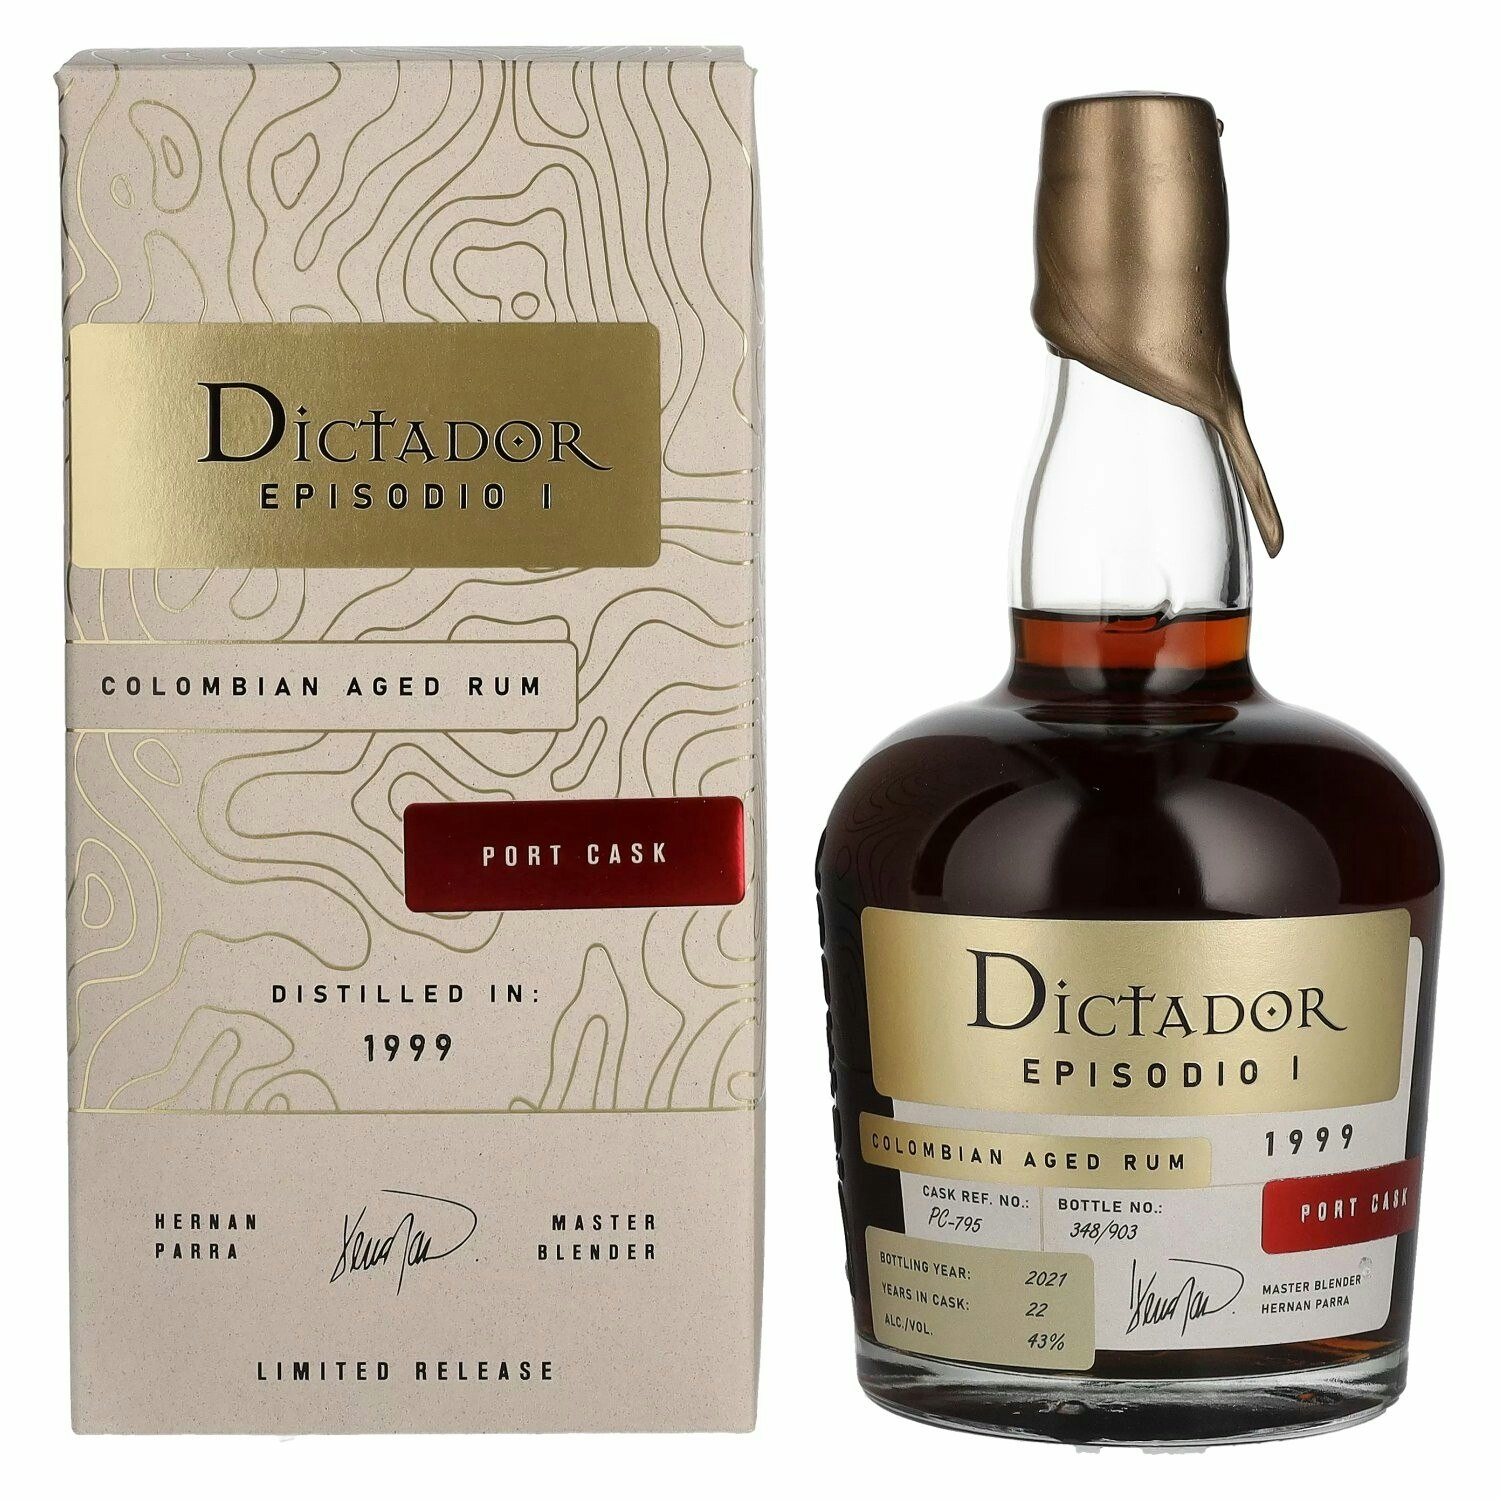 Dictador EPISODIO I 22 Years Old PORT CASK Rum 1999 43% Vol. 0,7l in Giftbox